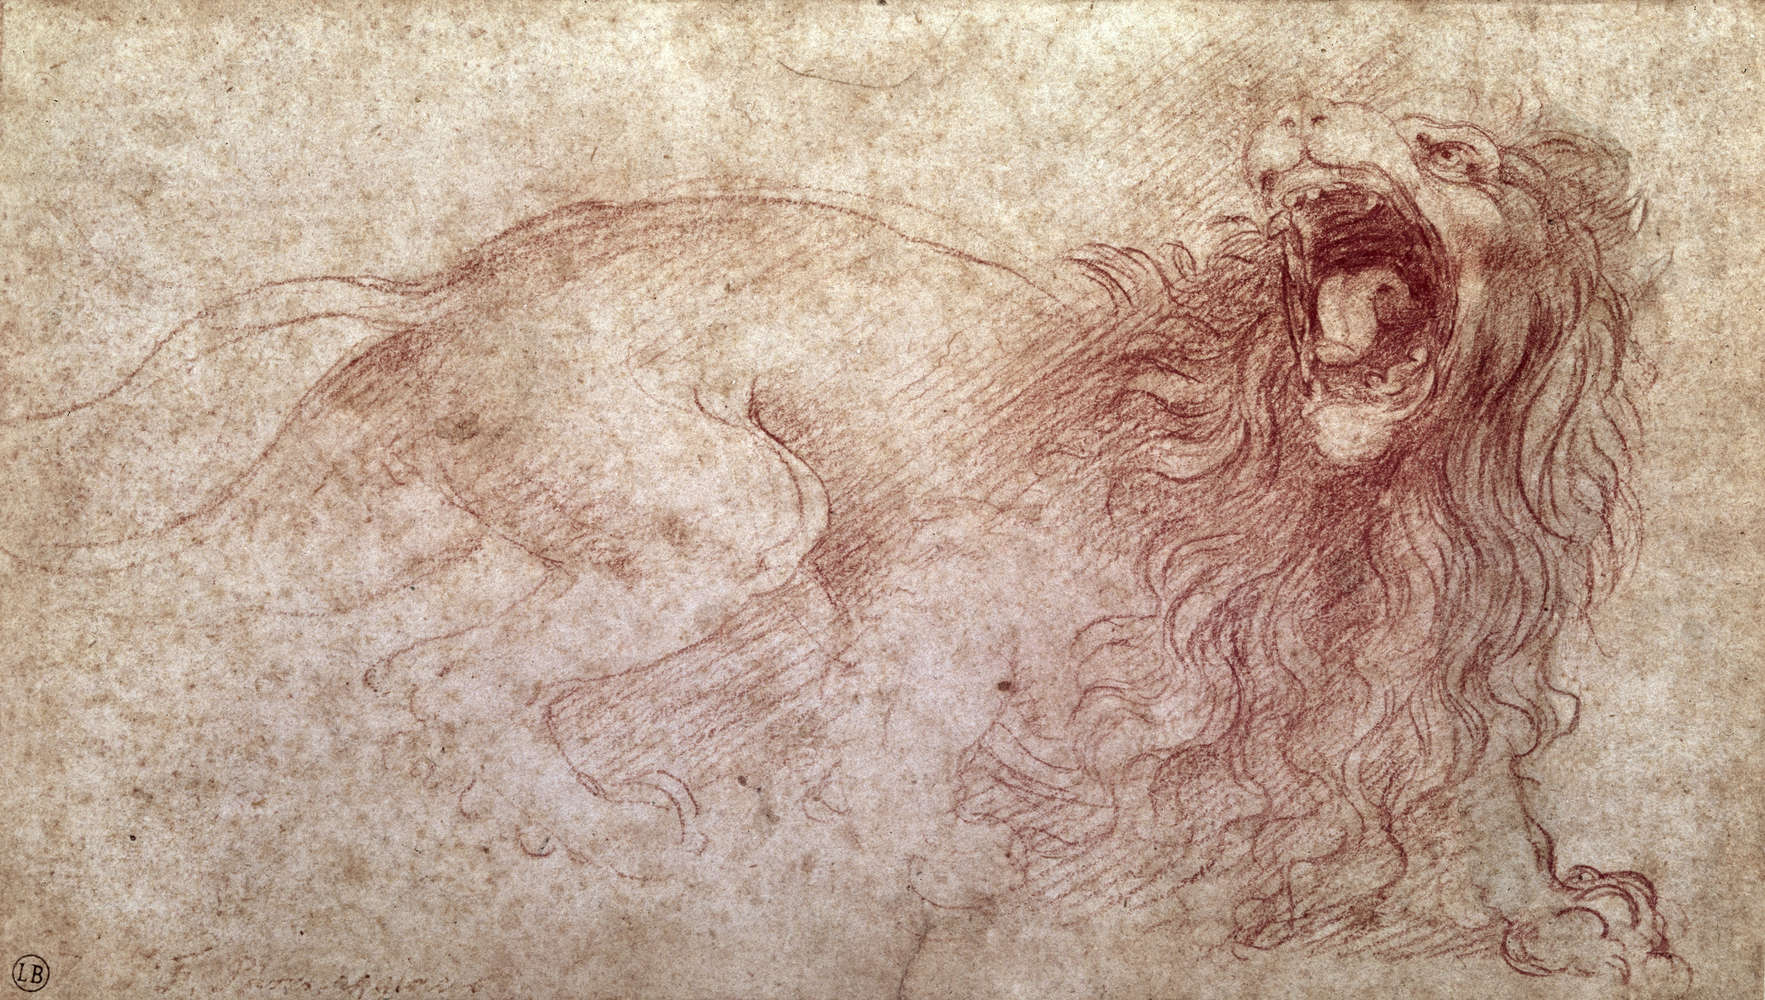             Photo wallpaper "Sketch of a roaring lion " by Leonardo da Vinci
        